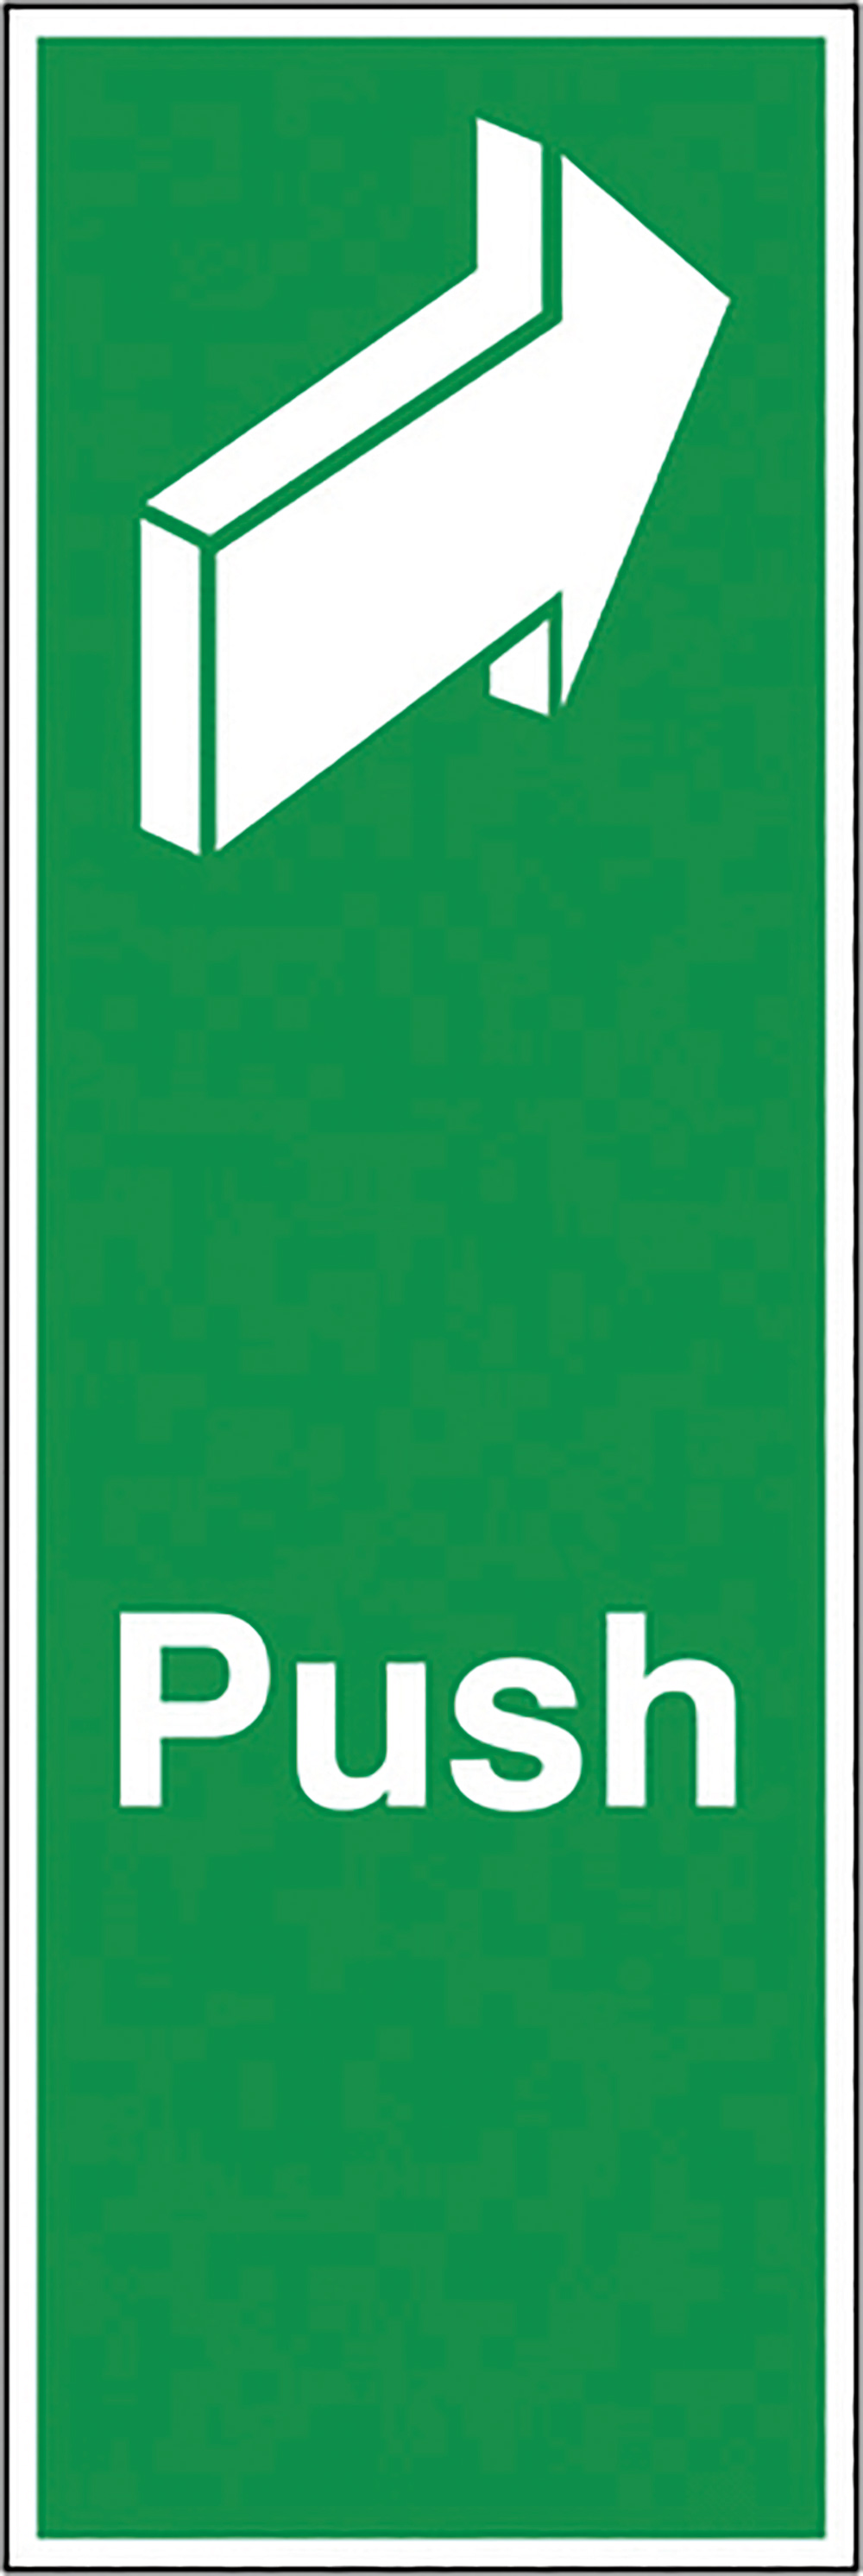 Push  150x50mm 1.2mm Rigid Plastic Safety Sign  